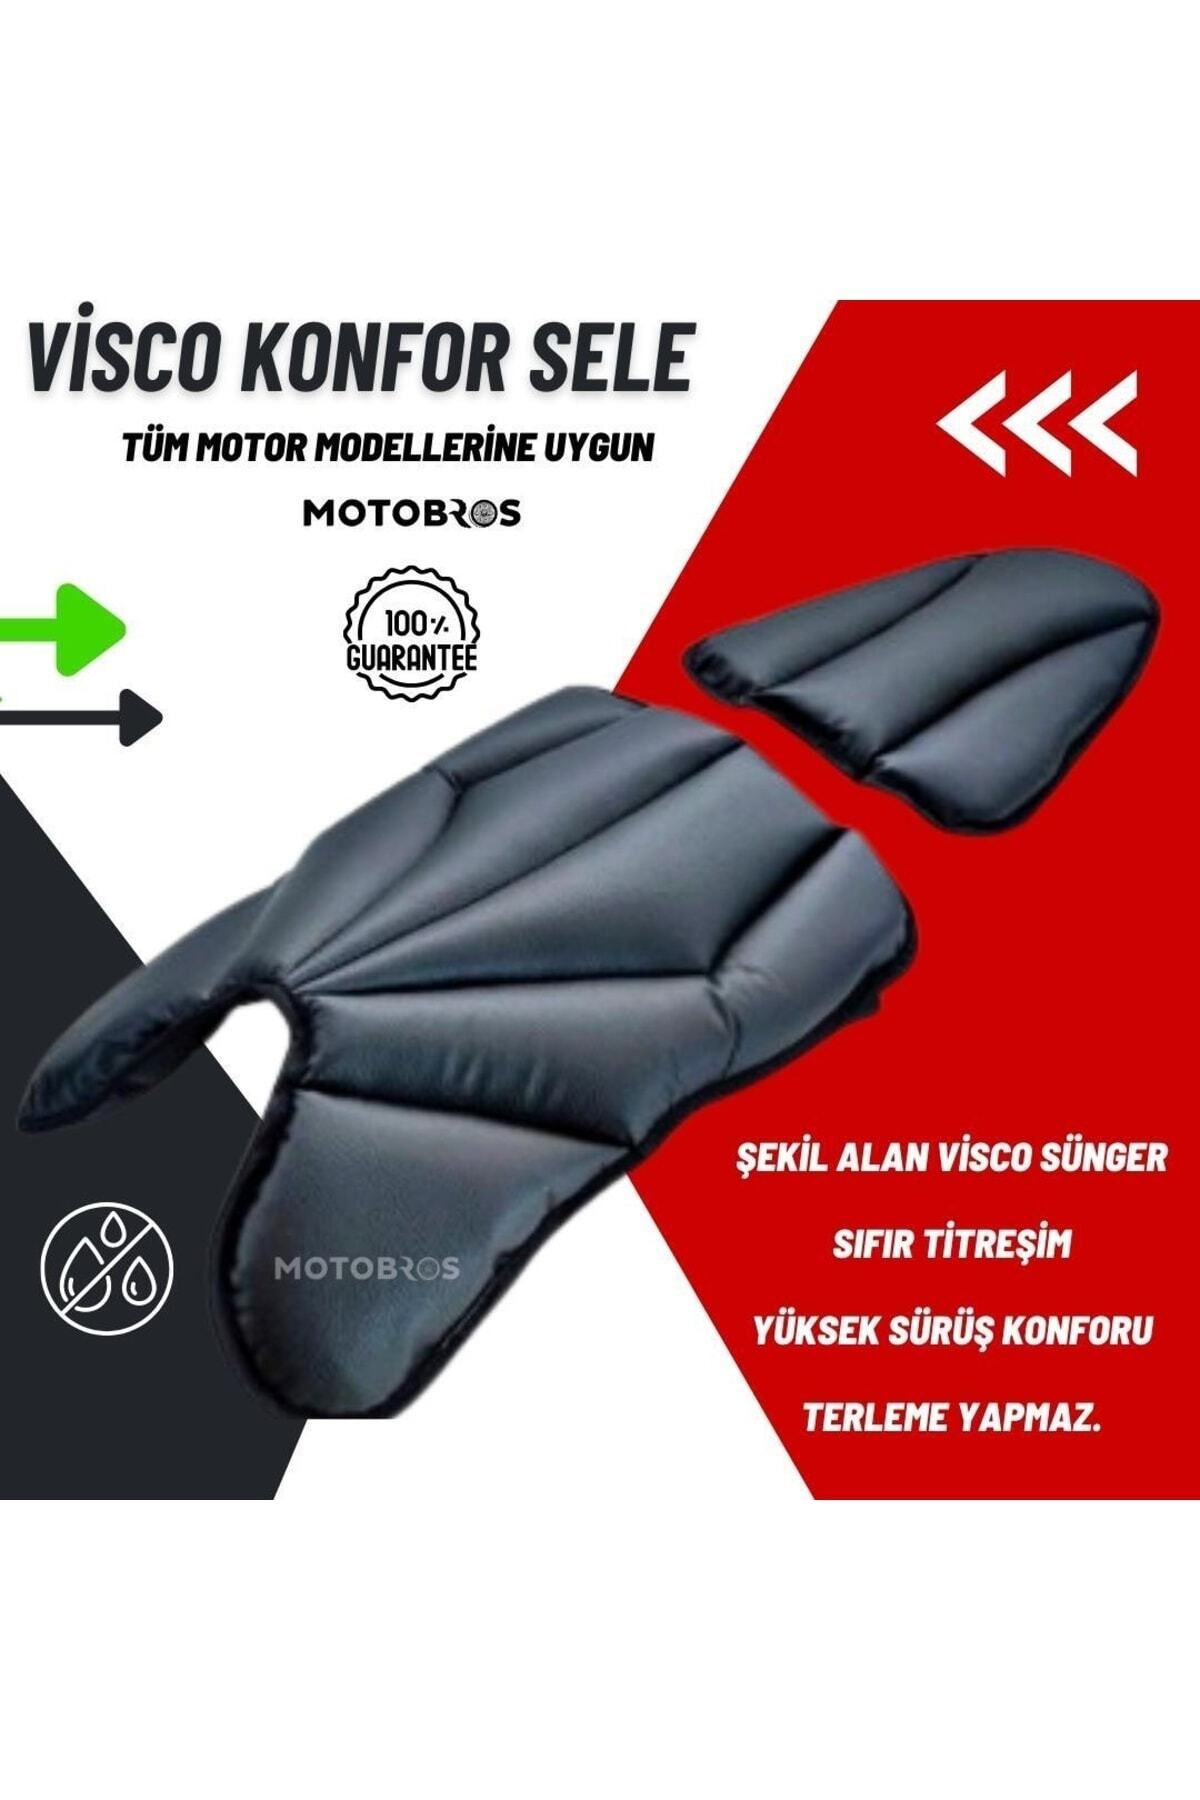 Motobros Motosiklet hava destekli kalın deri konfor sele minderi ( visco süngerli premium model )